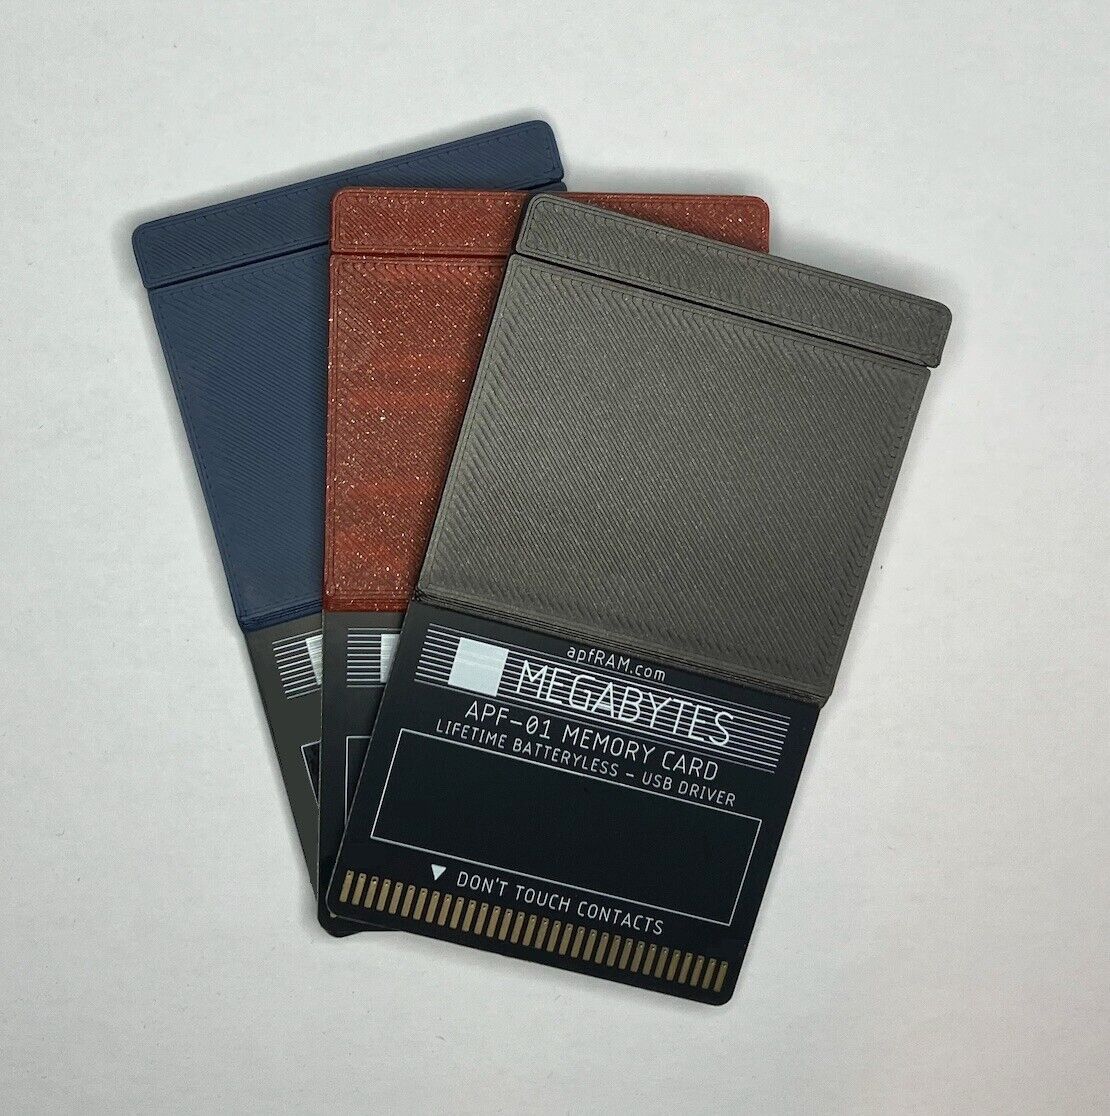 Atari Portfolio 1.5 MegaBytes Card with USB file transfer utility